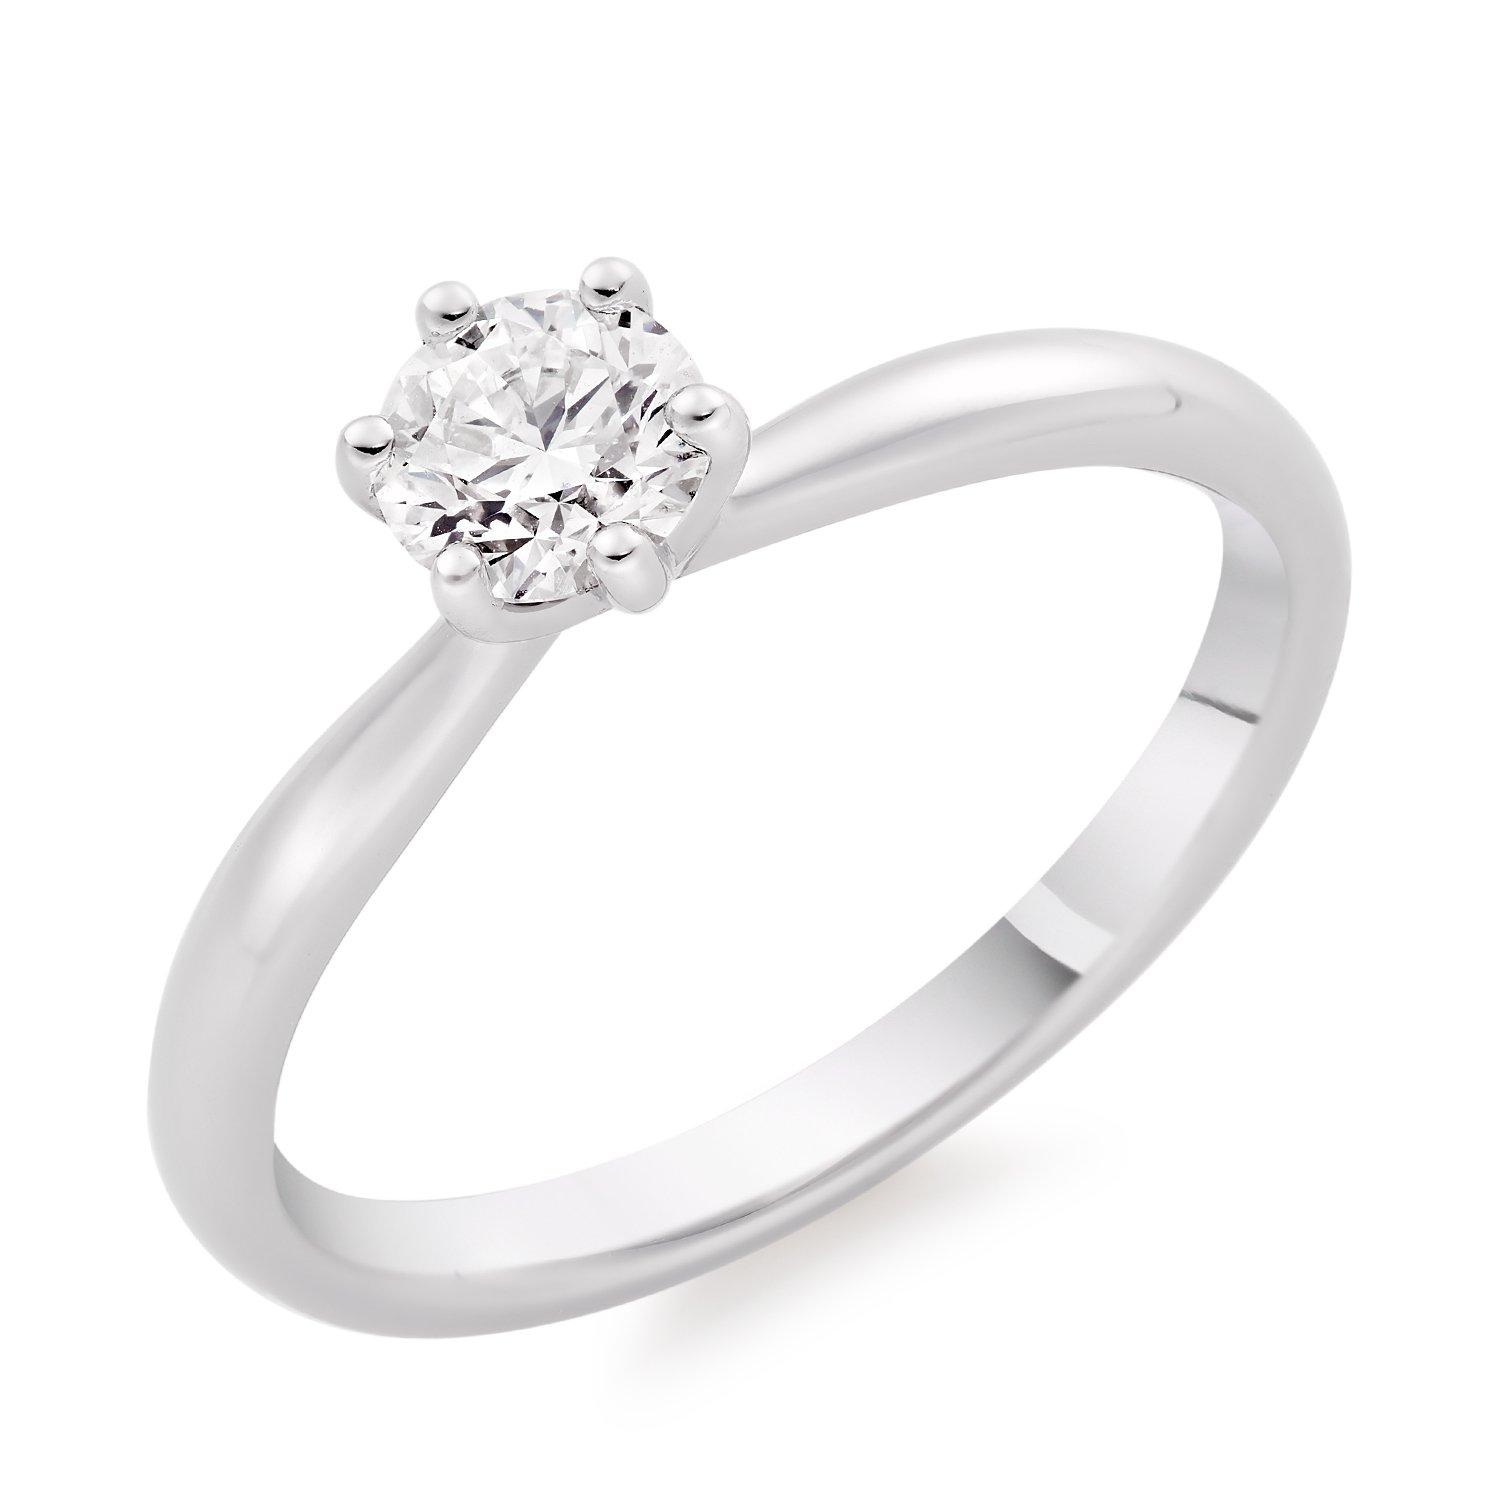 Platinum Diamond Solitaire Ring | 0137318 | Beaverbrooks the Jewellers